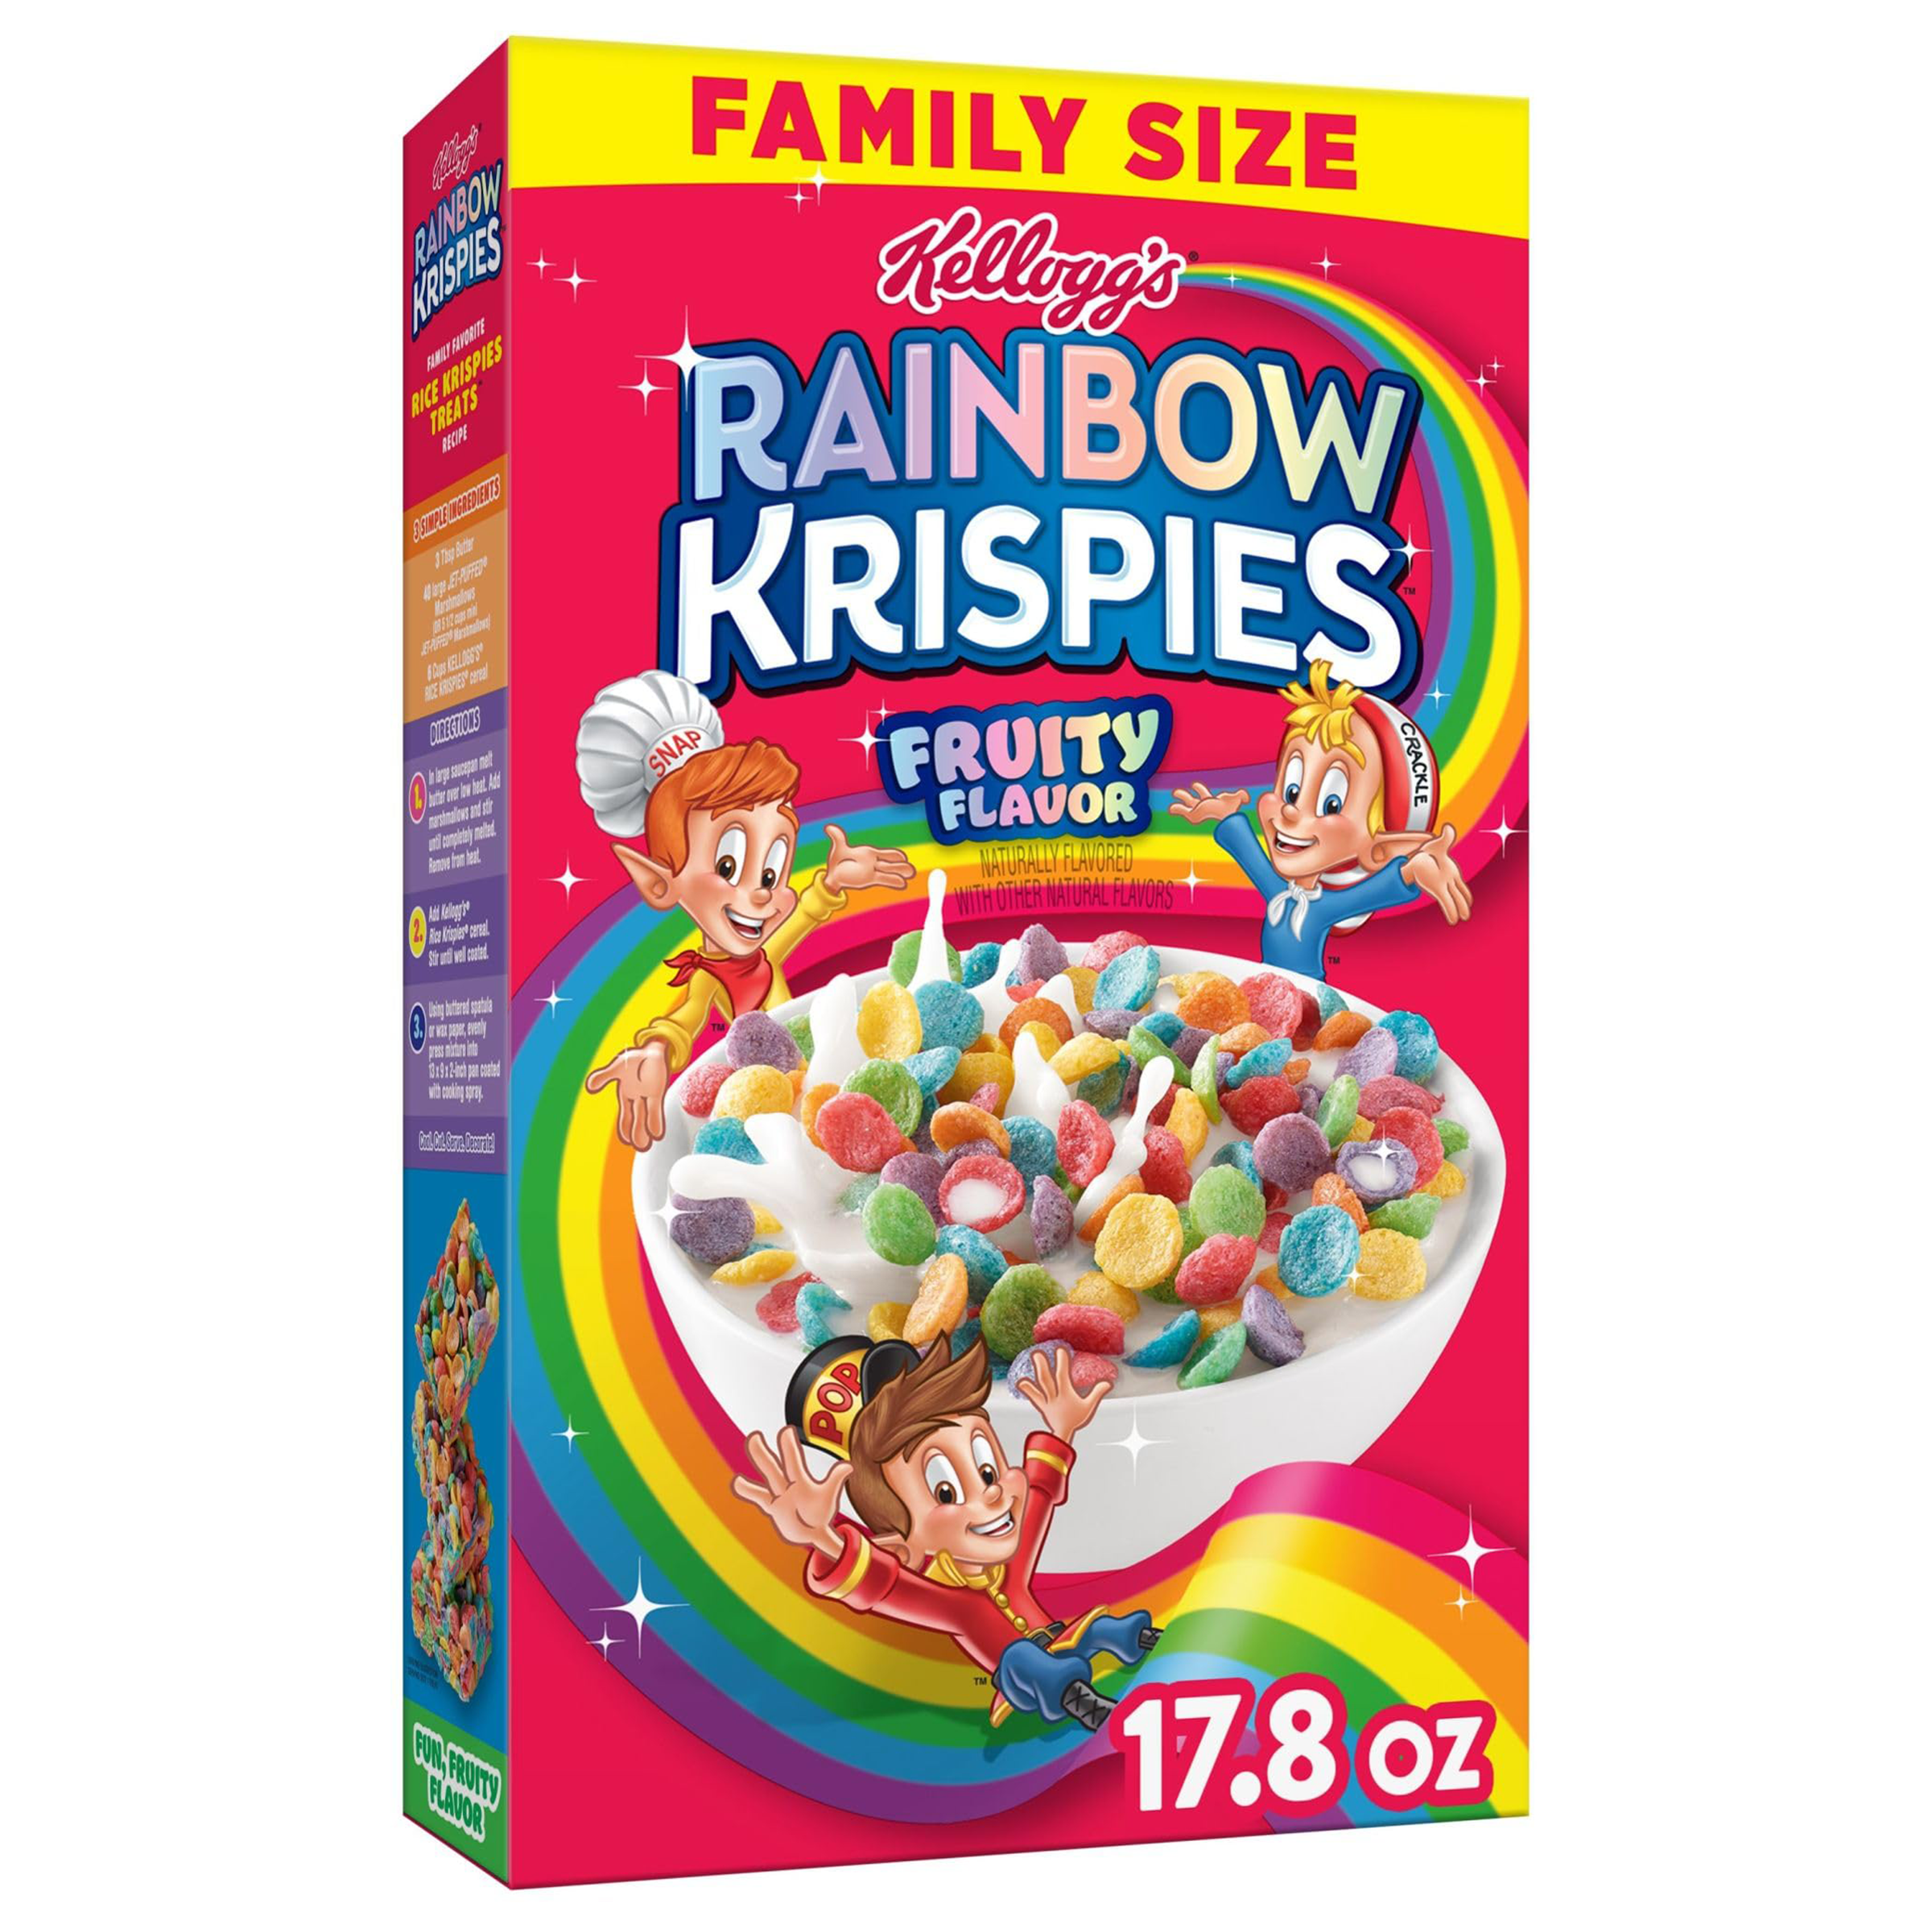 Rainbow Krispies - Family Size